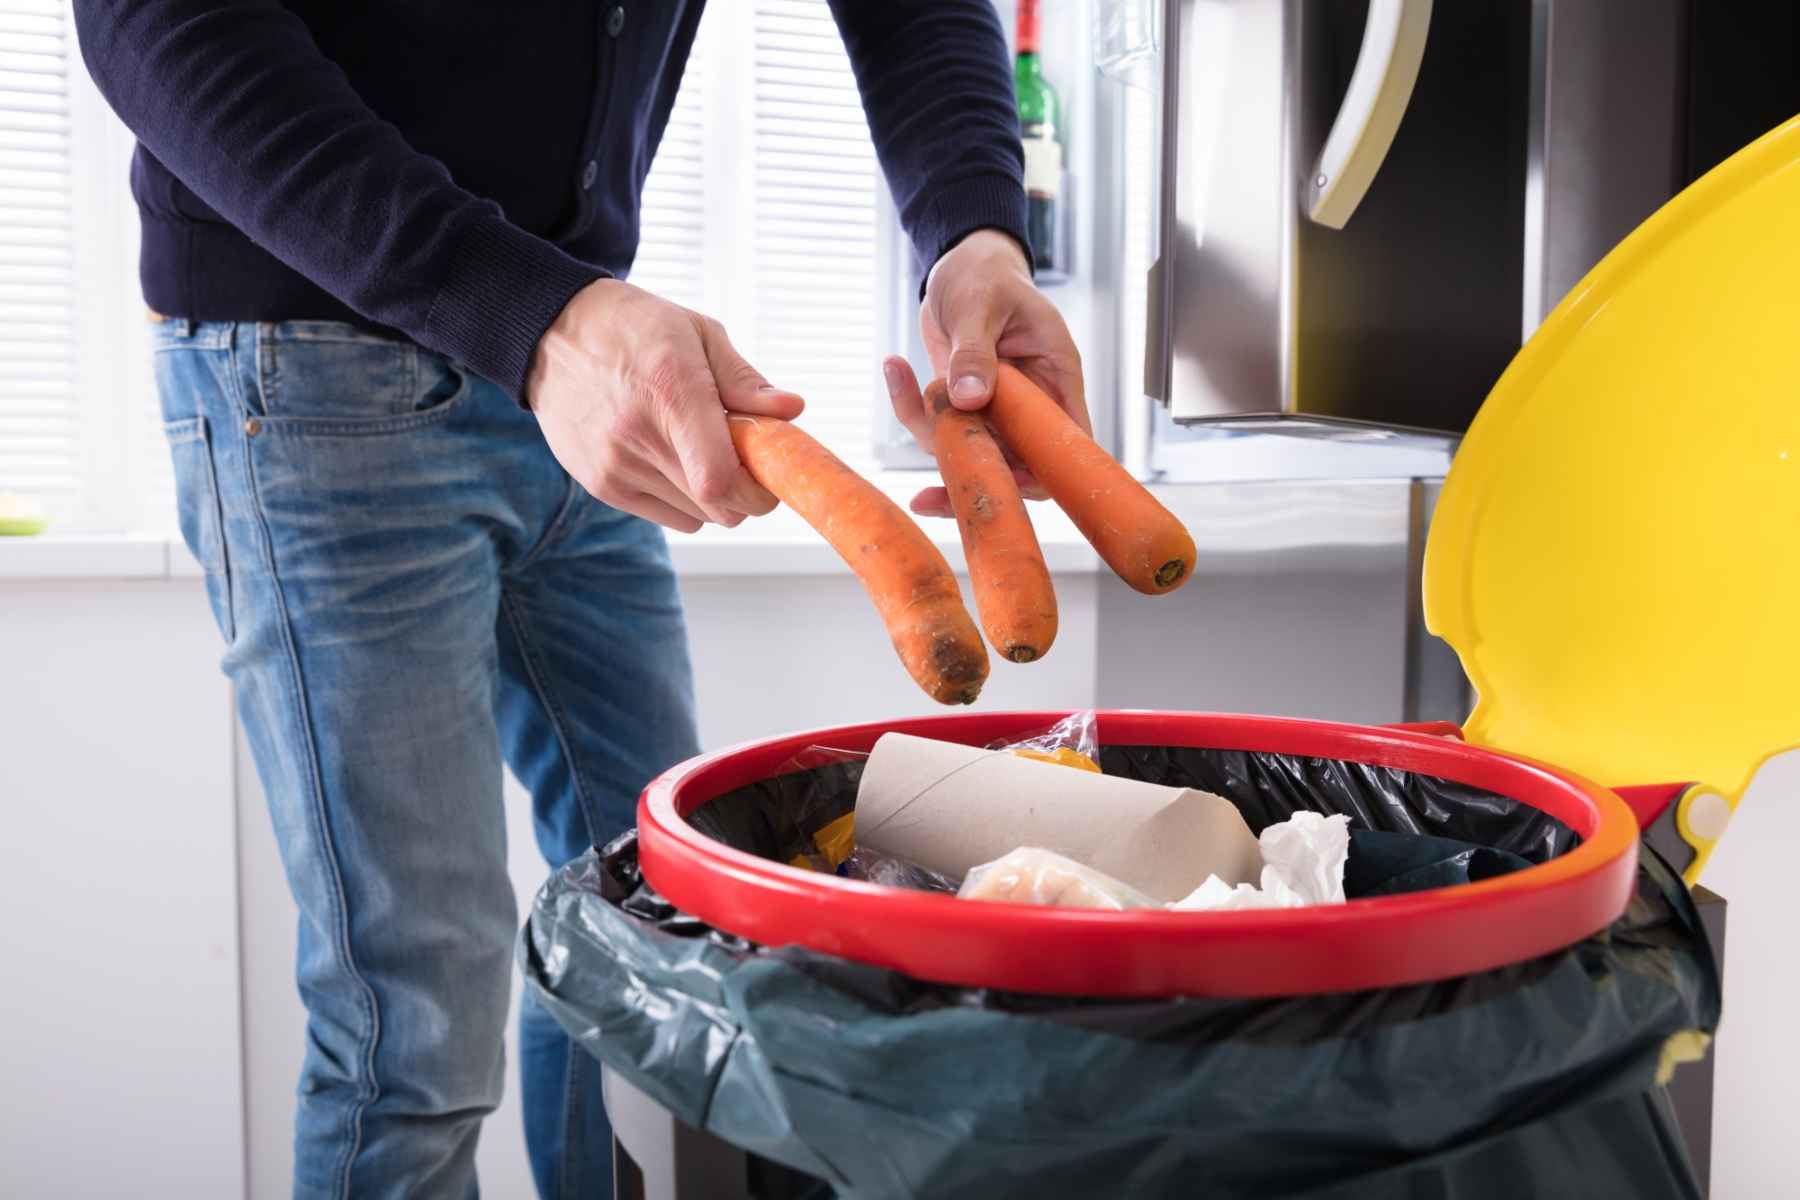 Persona tirando zanahorias a la basura